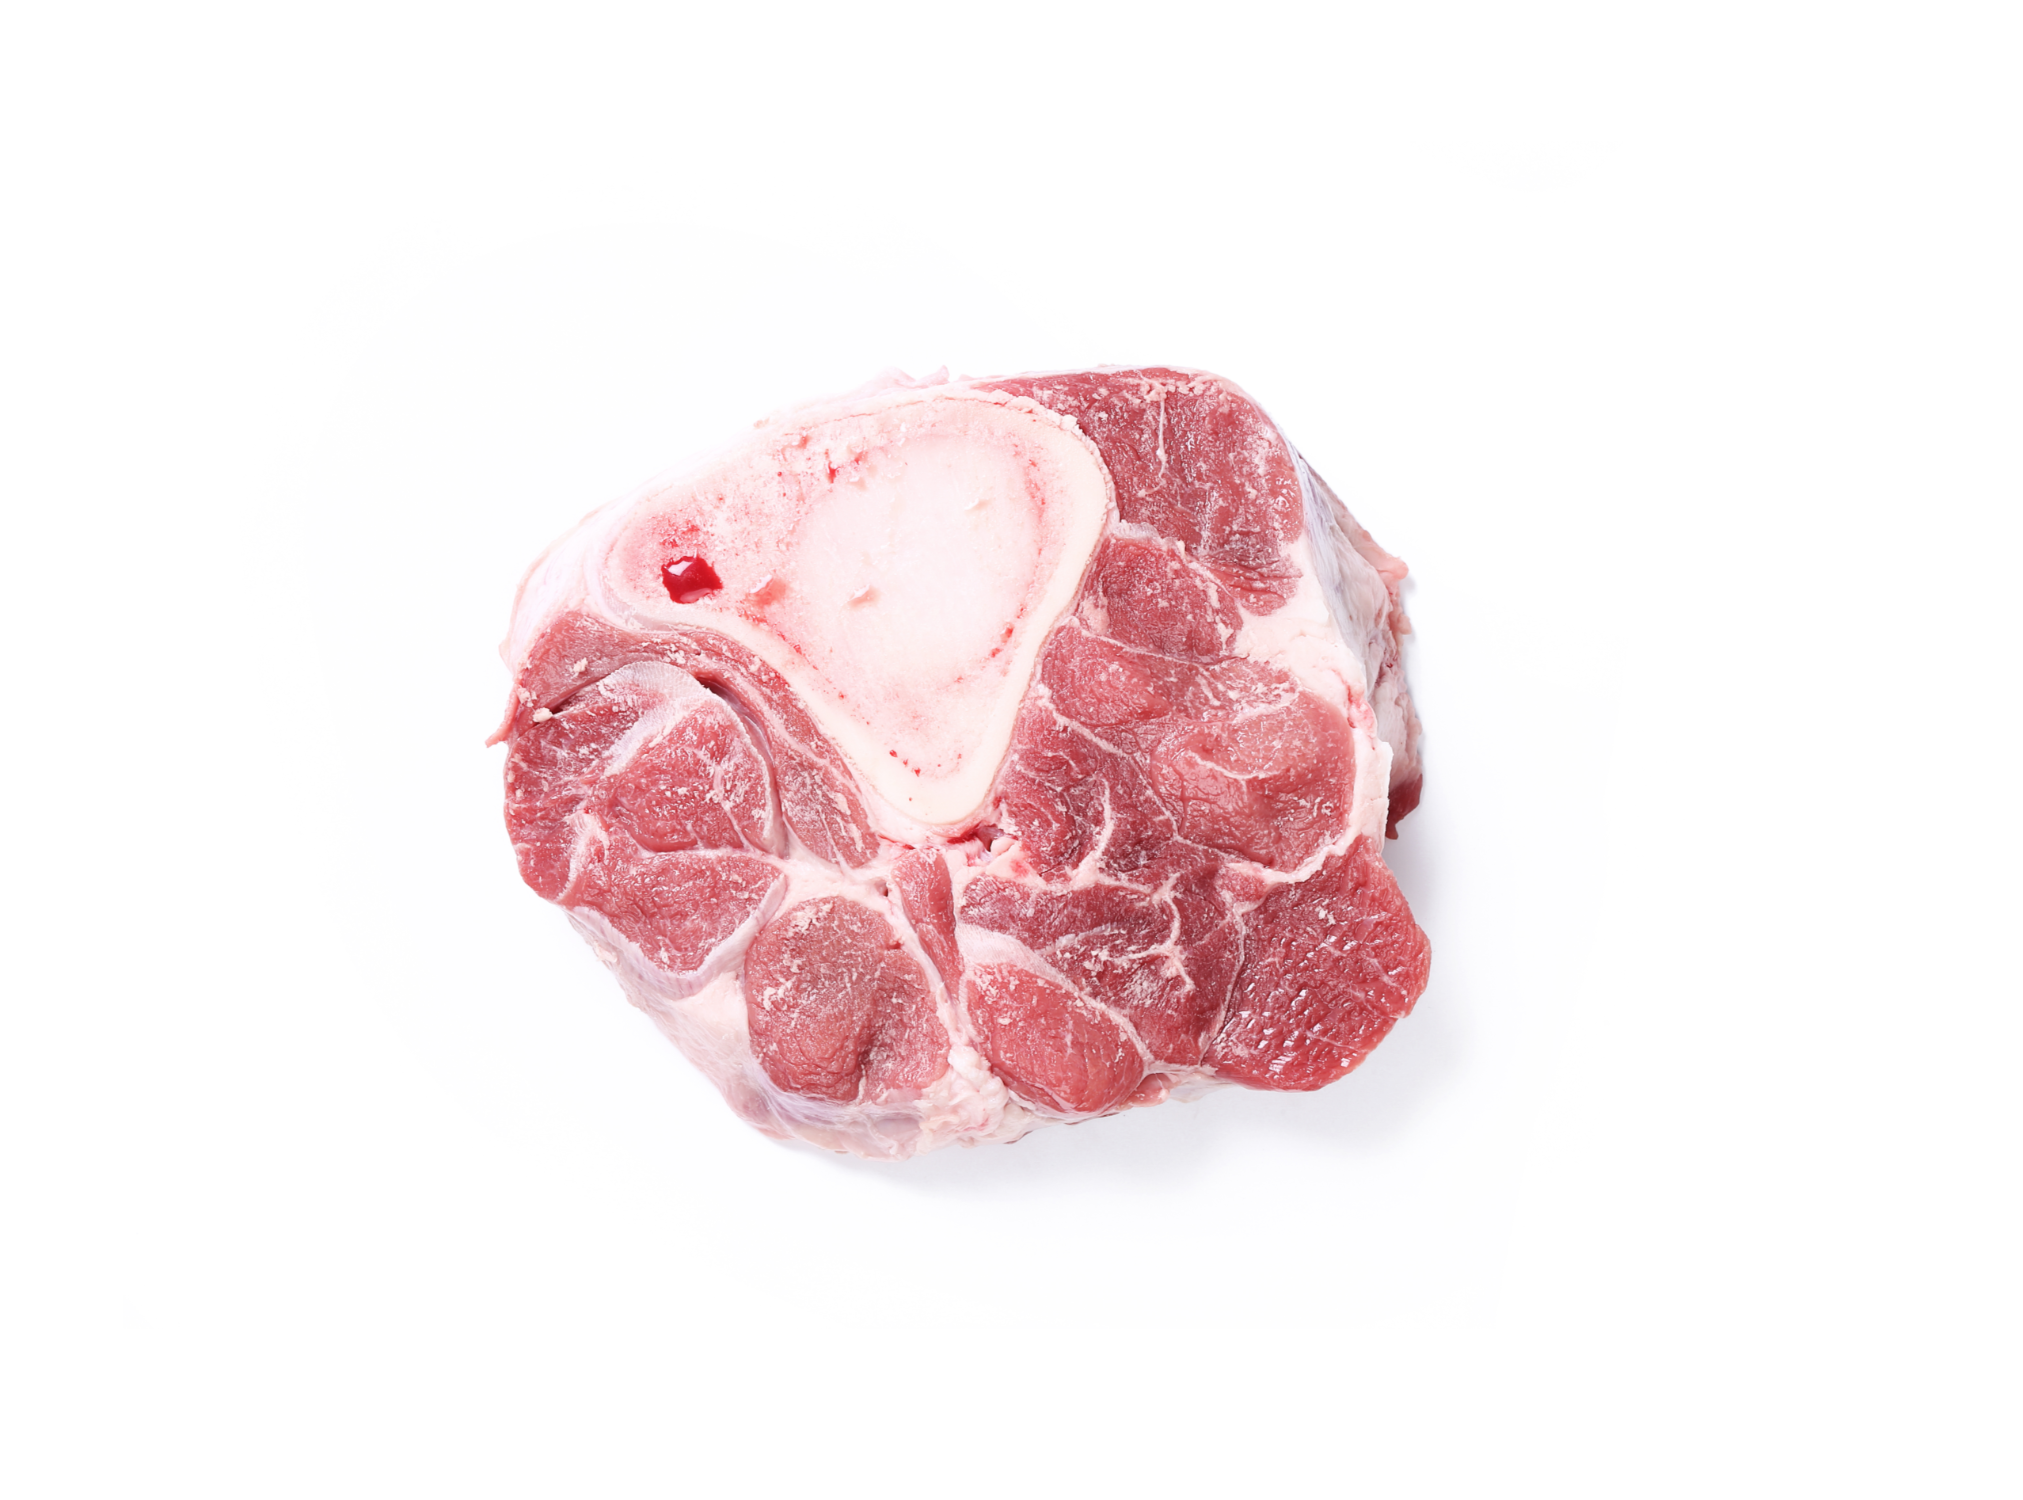 Halal Beef Shank - Boneless 1 piece (4 lb)